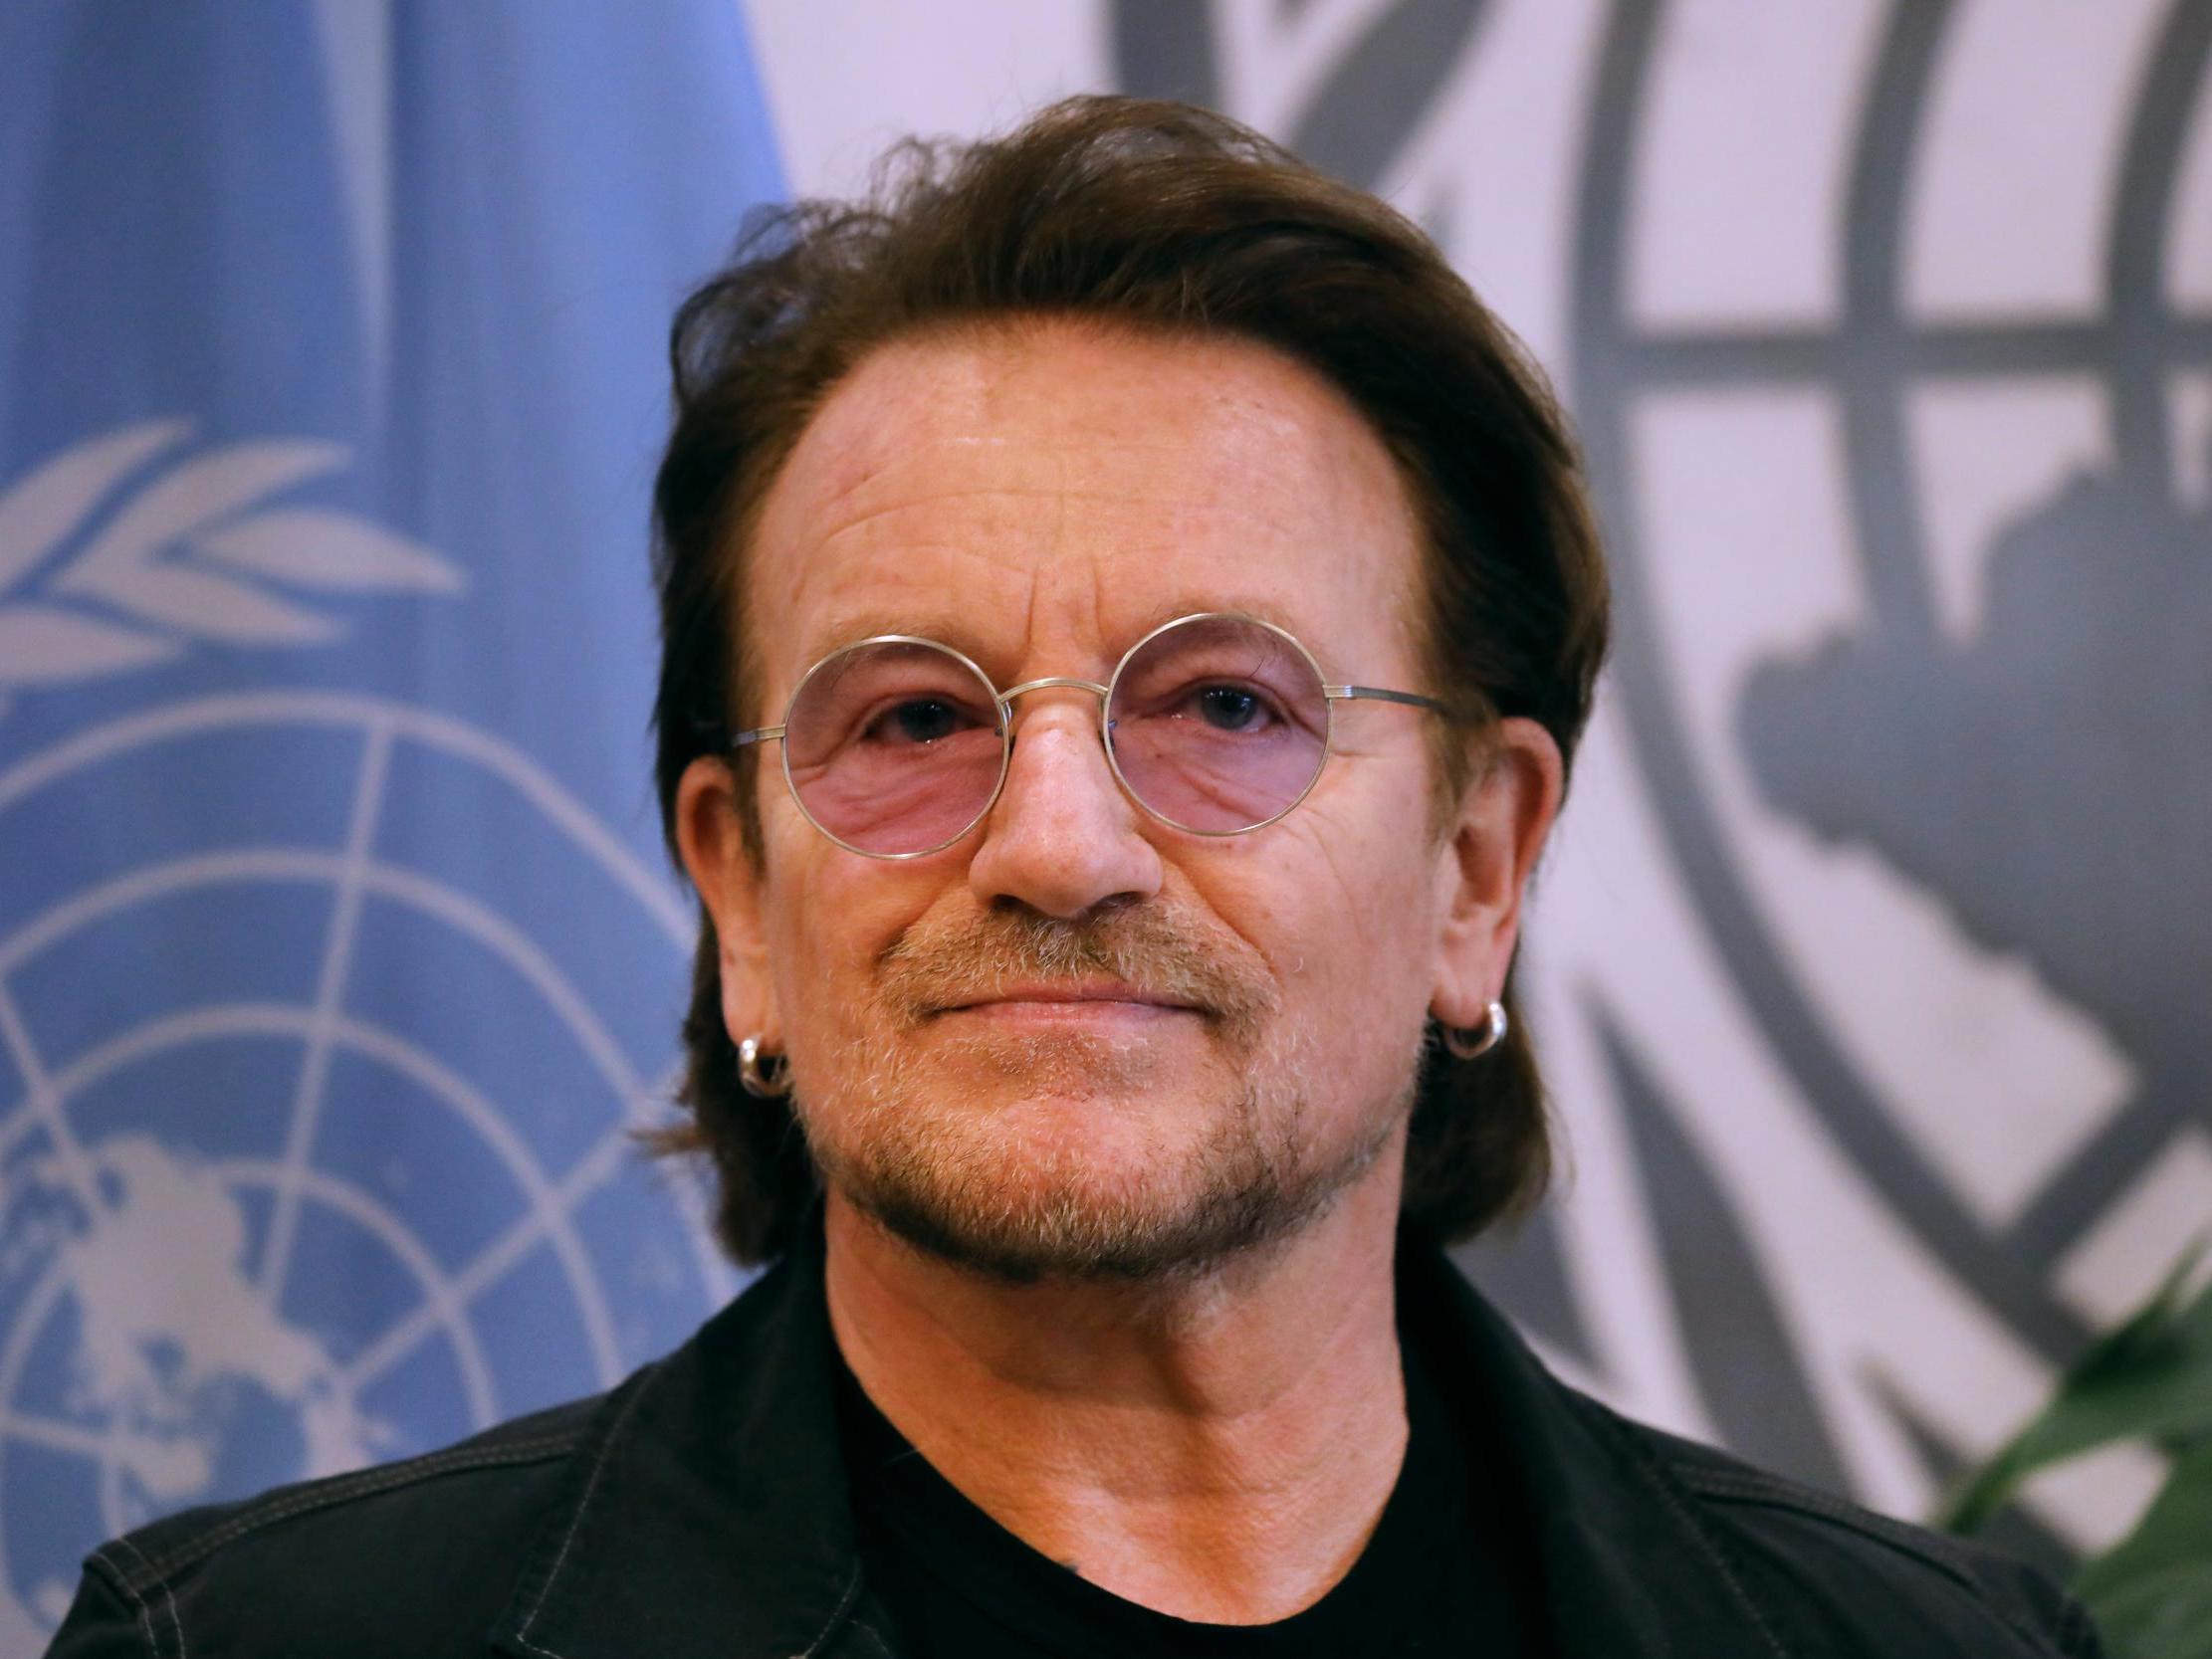 Bono is trying to raise spirits on social media